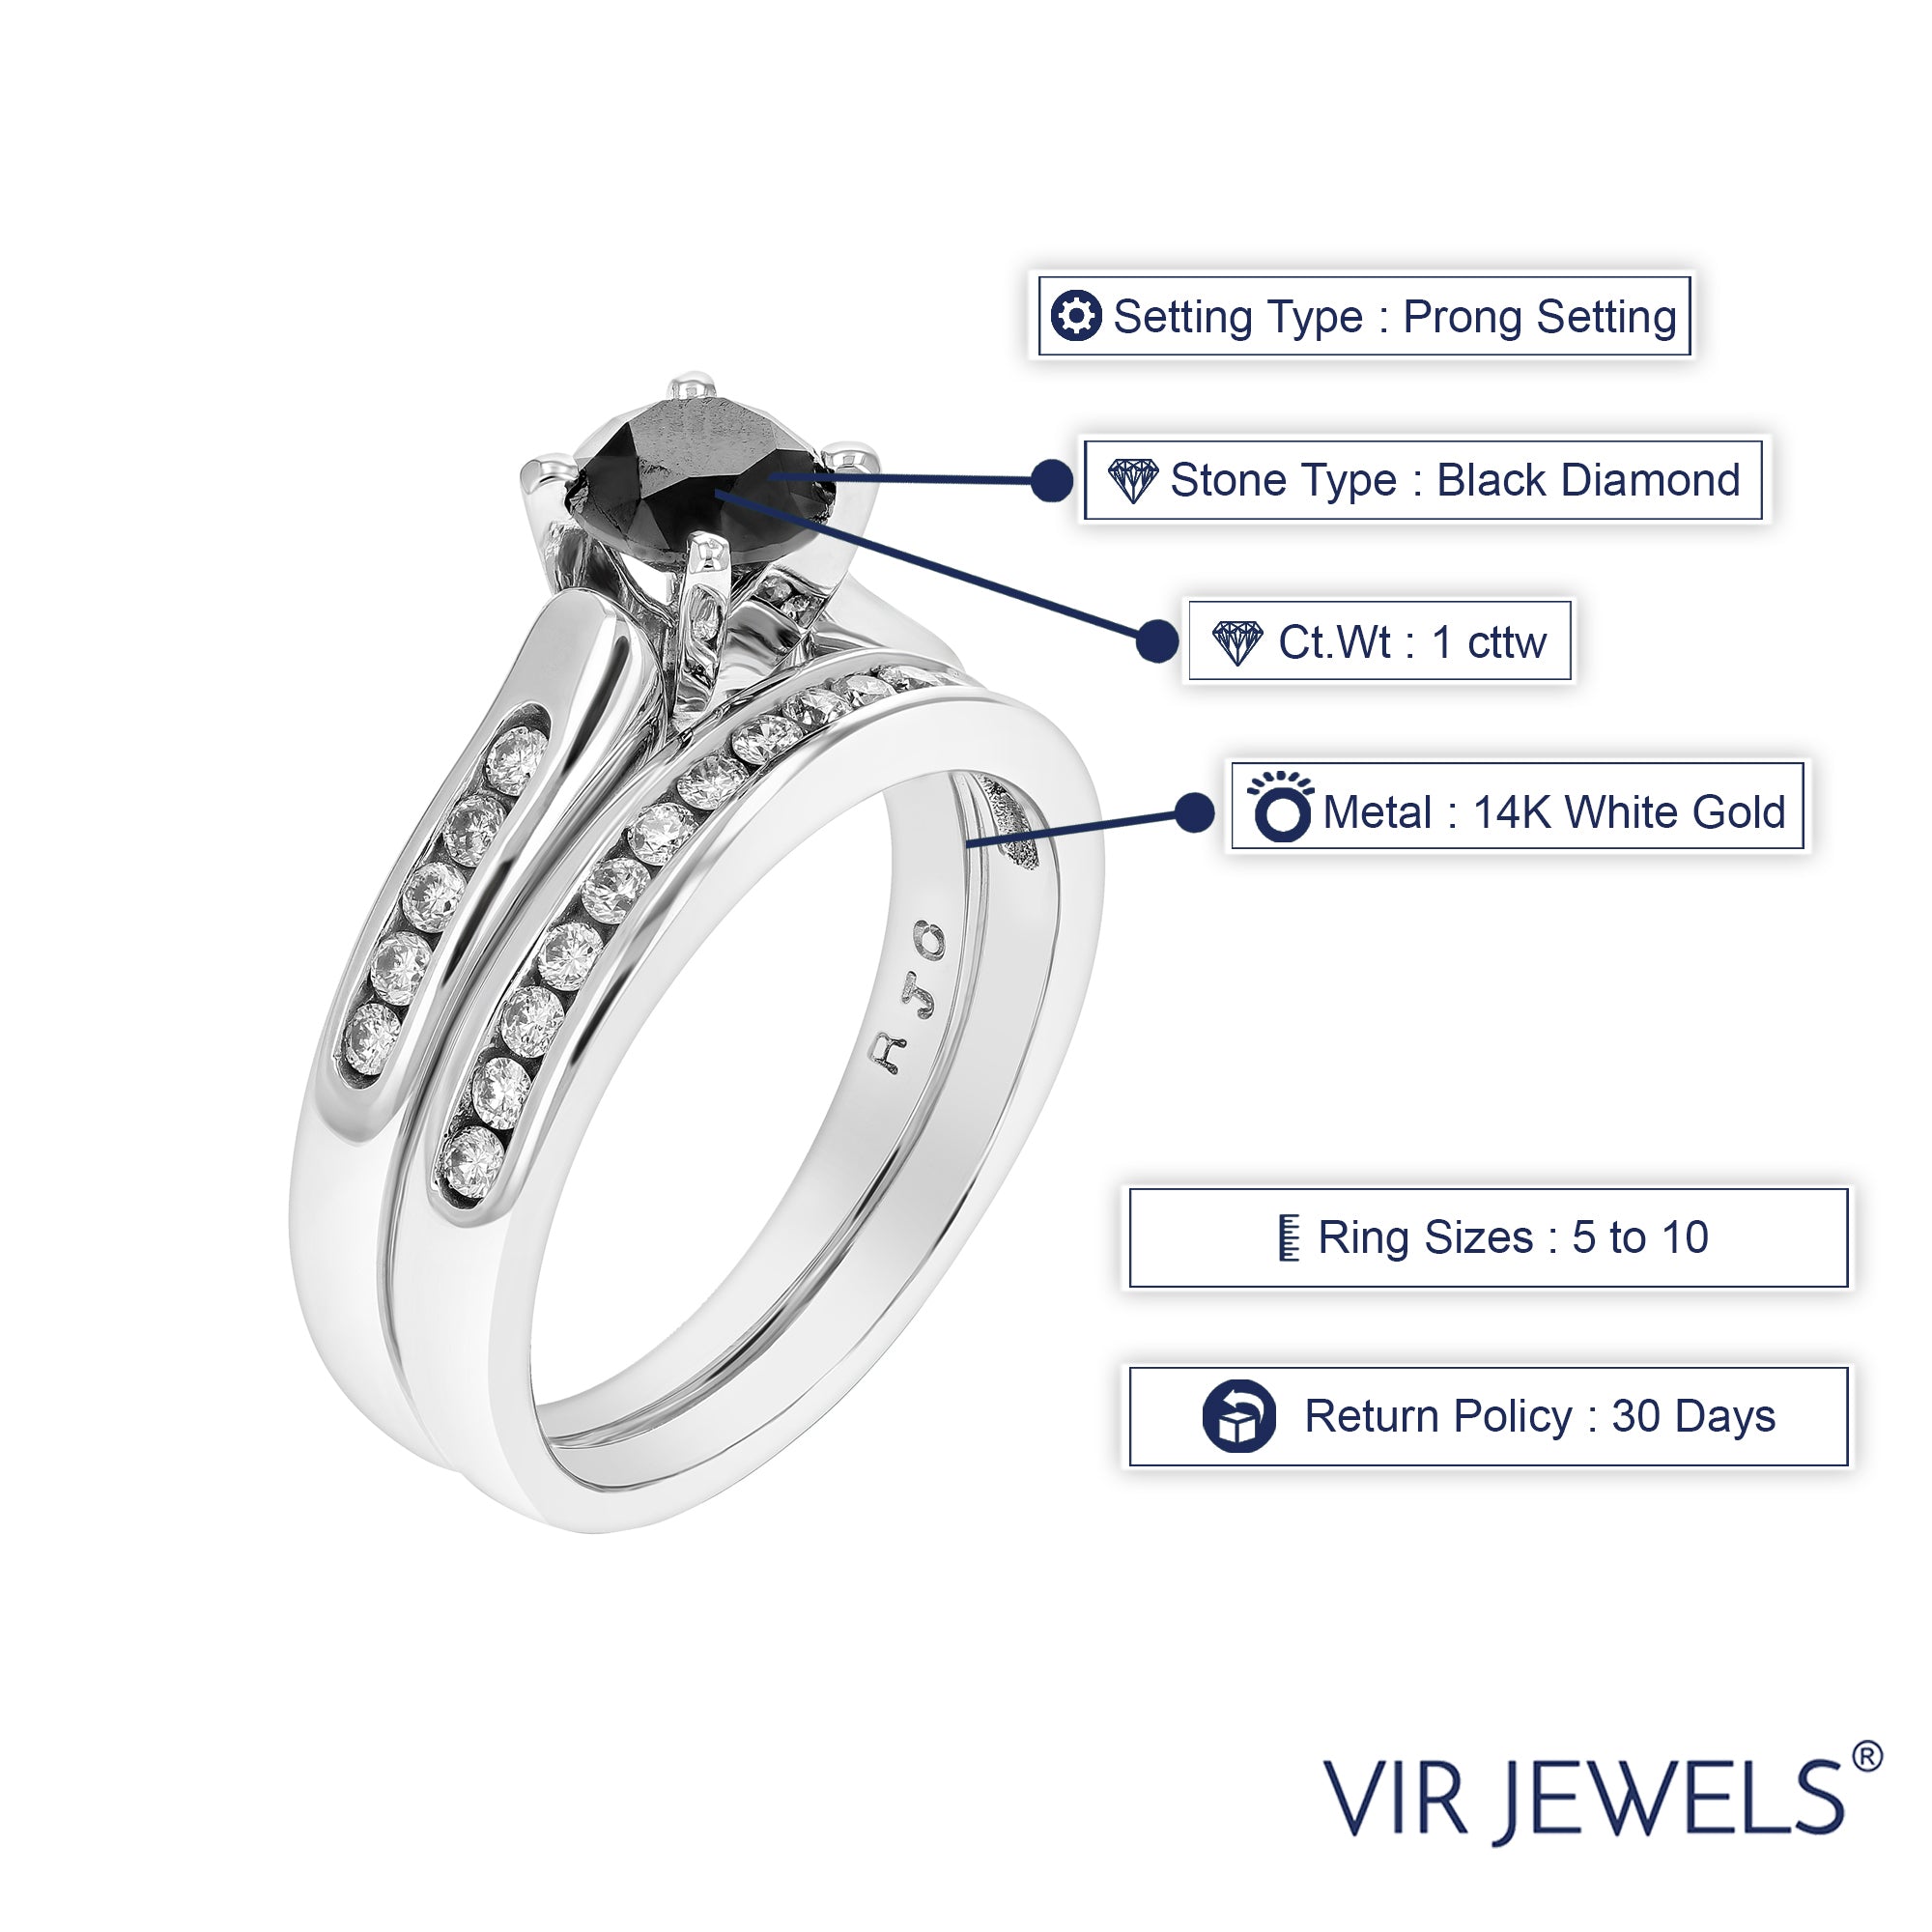 1 cttw Black Diamond Wedding Engagement Ring Bridal Set 14K White Gold Size 7